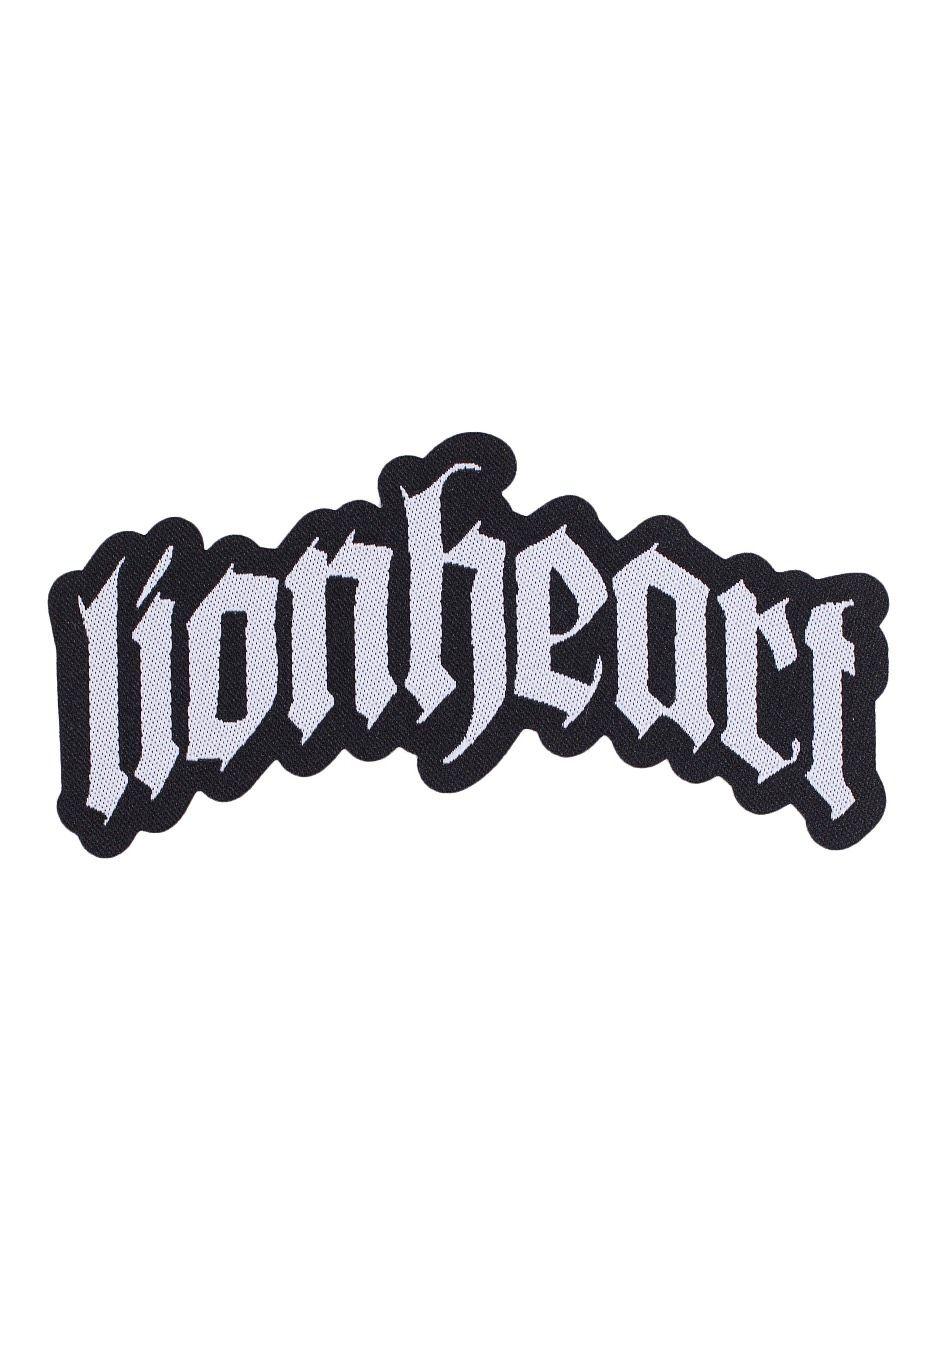 Lionheart Logo - Lionheart Die Cut Hardcore Merchandise